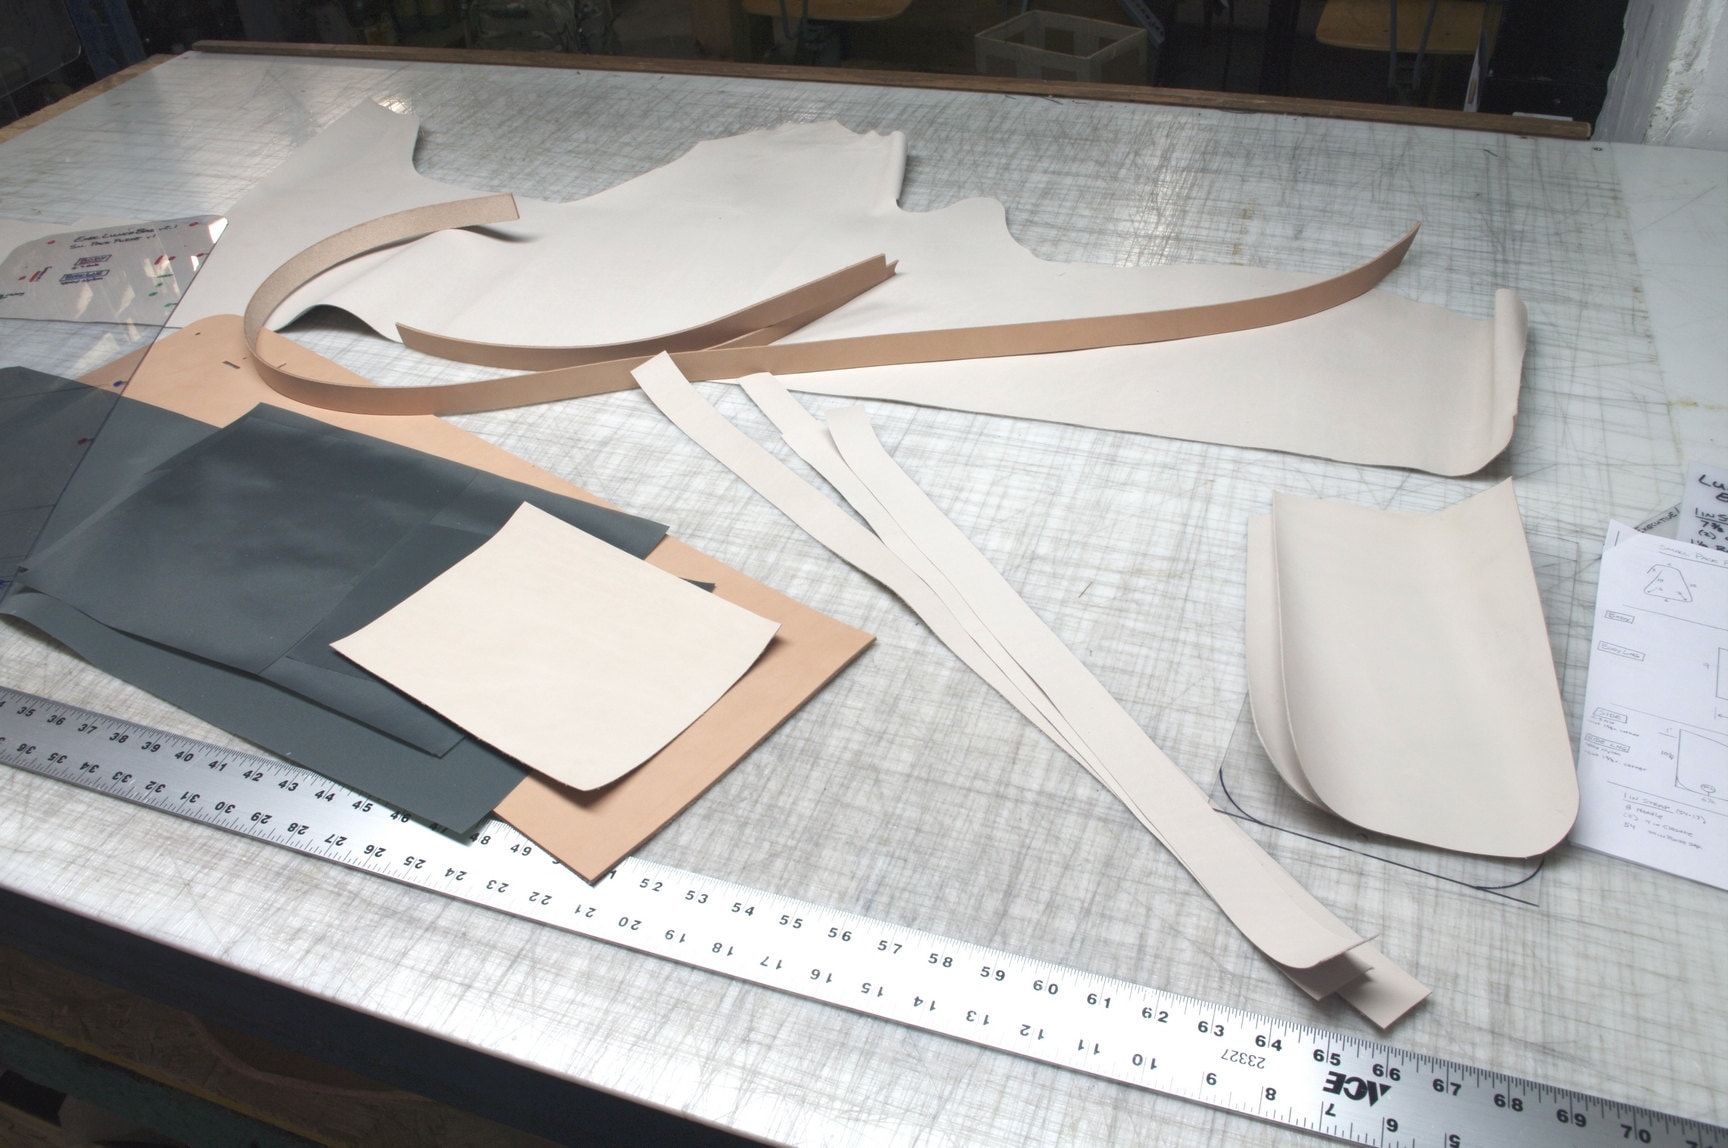 Cutting Leather